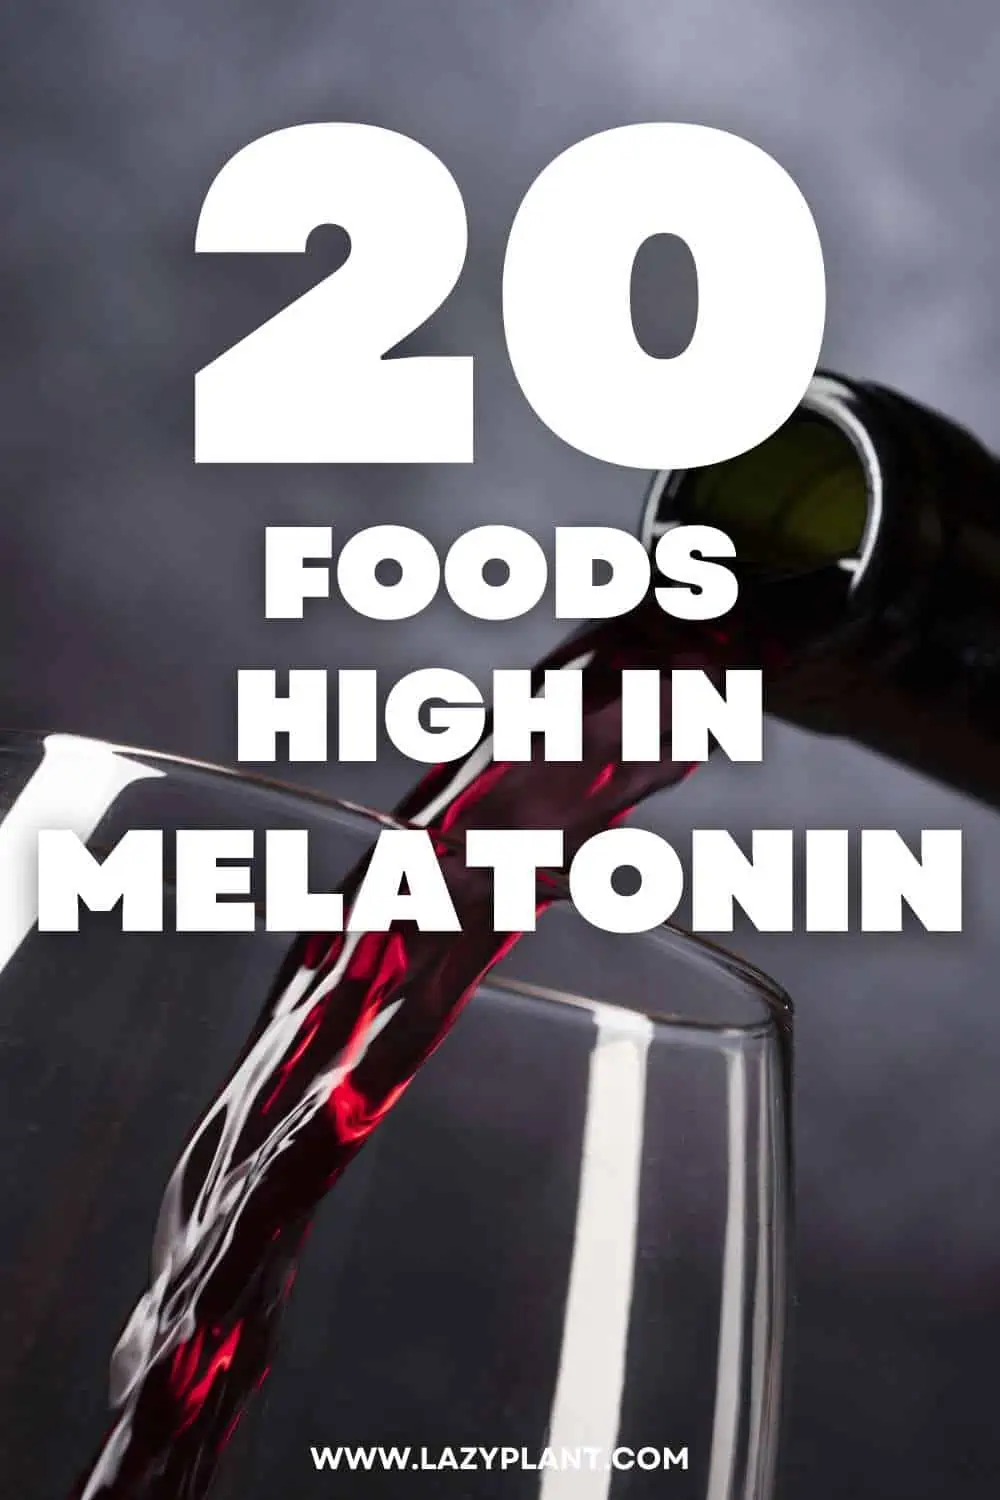 How to boost your melatonin intake through food?